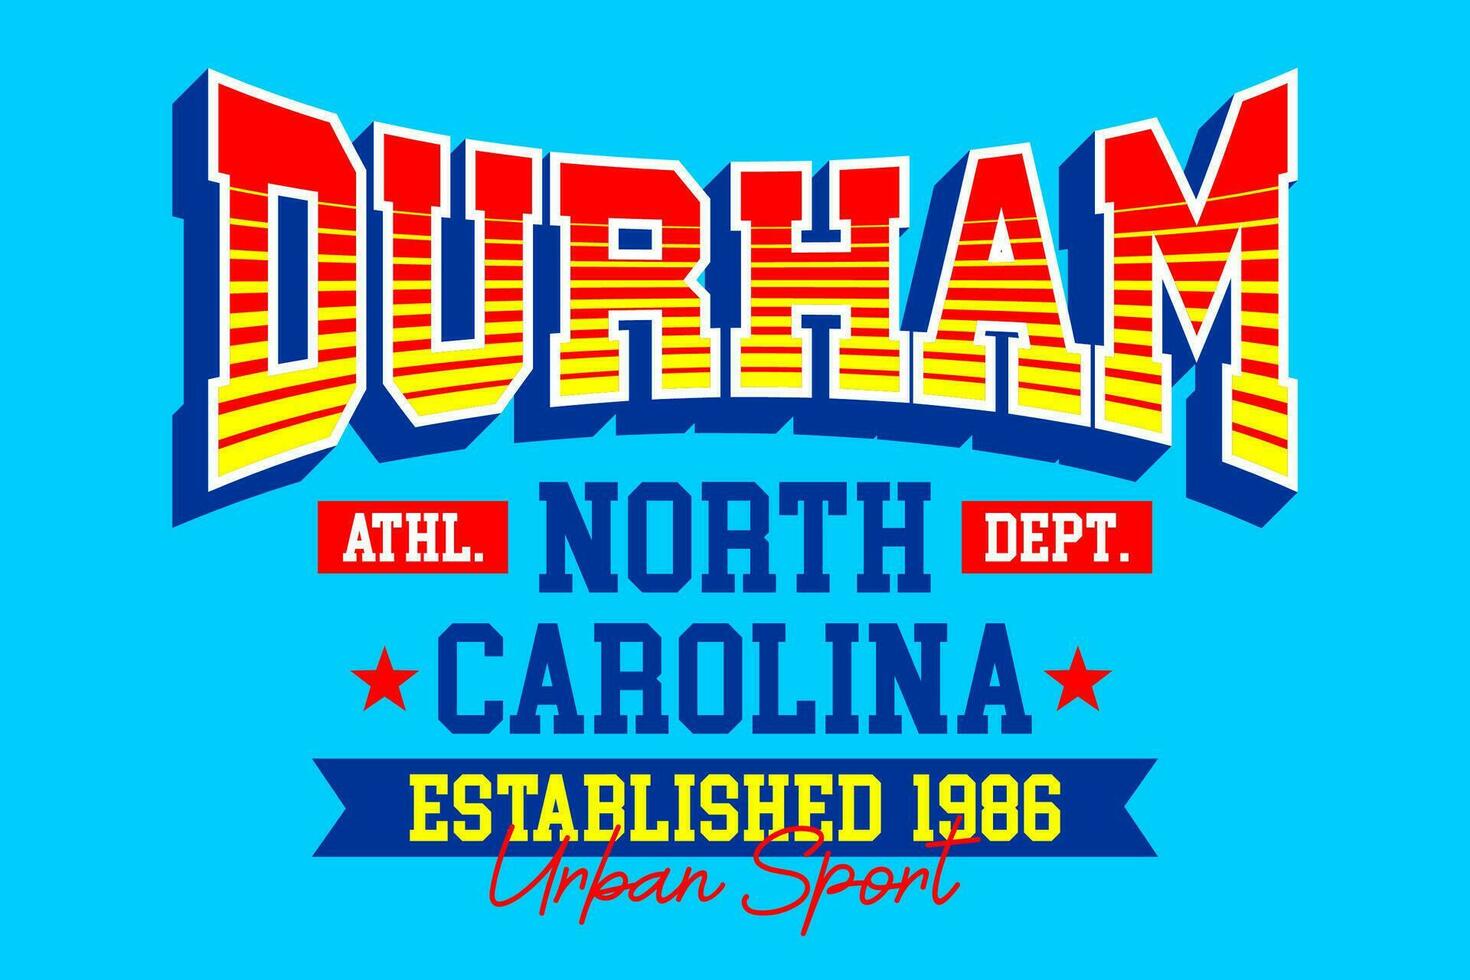 Durham North Carolina vintage college, for print on t shirts etc. vector